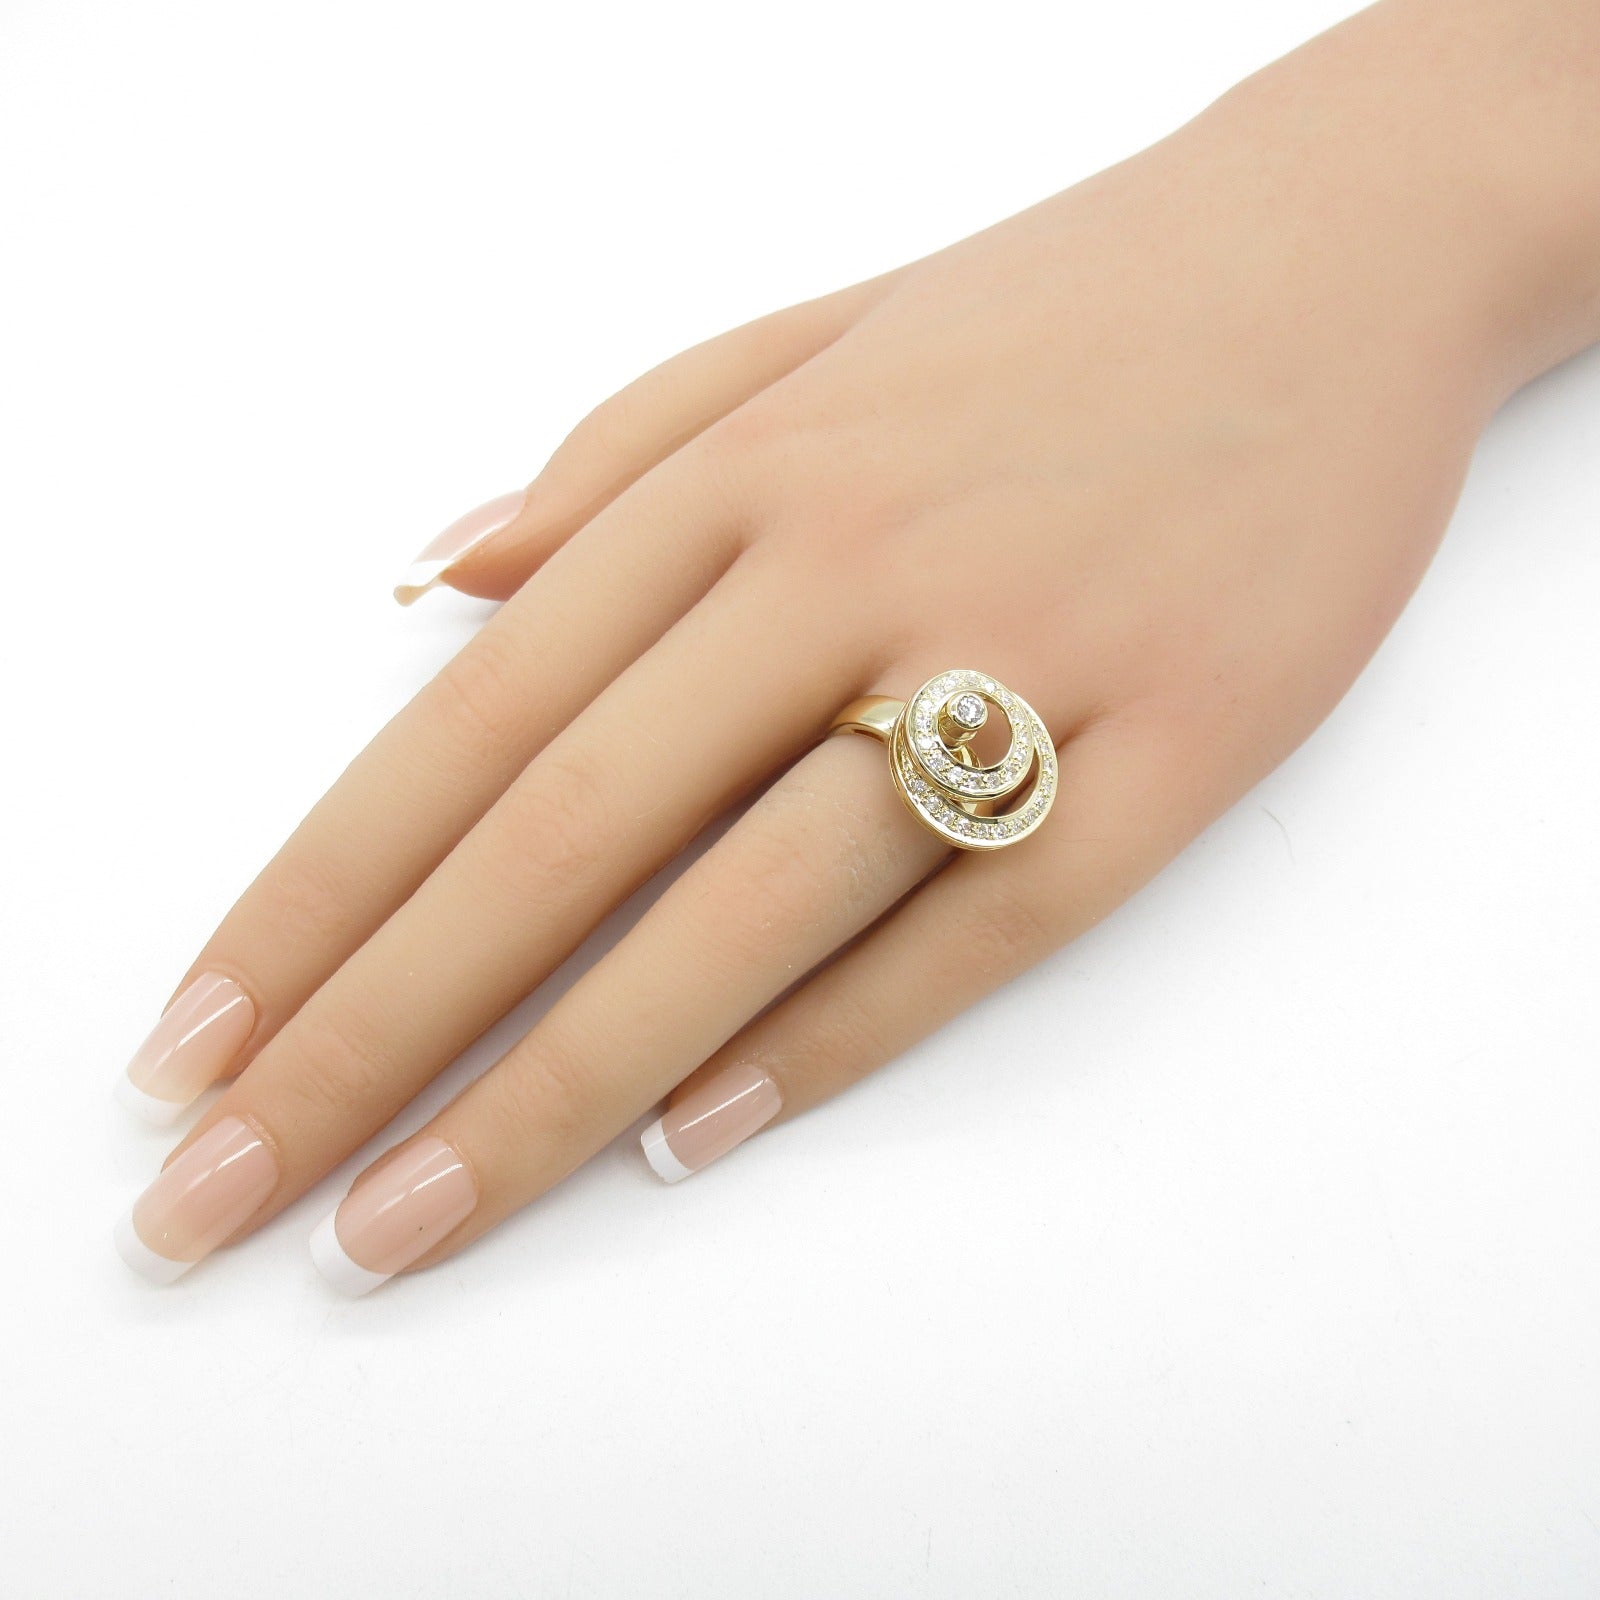 Jewelry Jewelry Diamond Ring Ring Ring Jewelry K18 (Yellow G) Diamond  Clear Diamond 8.3g